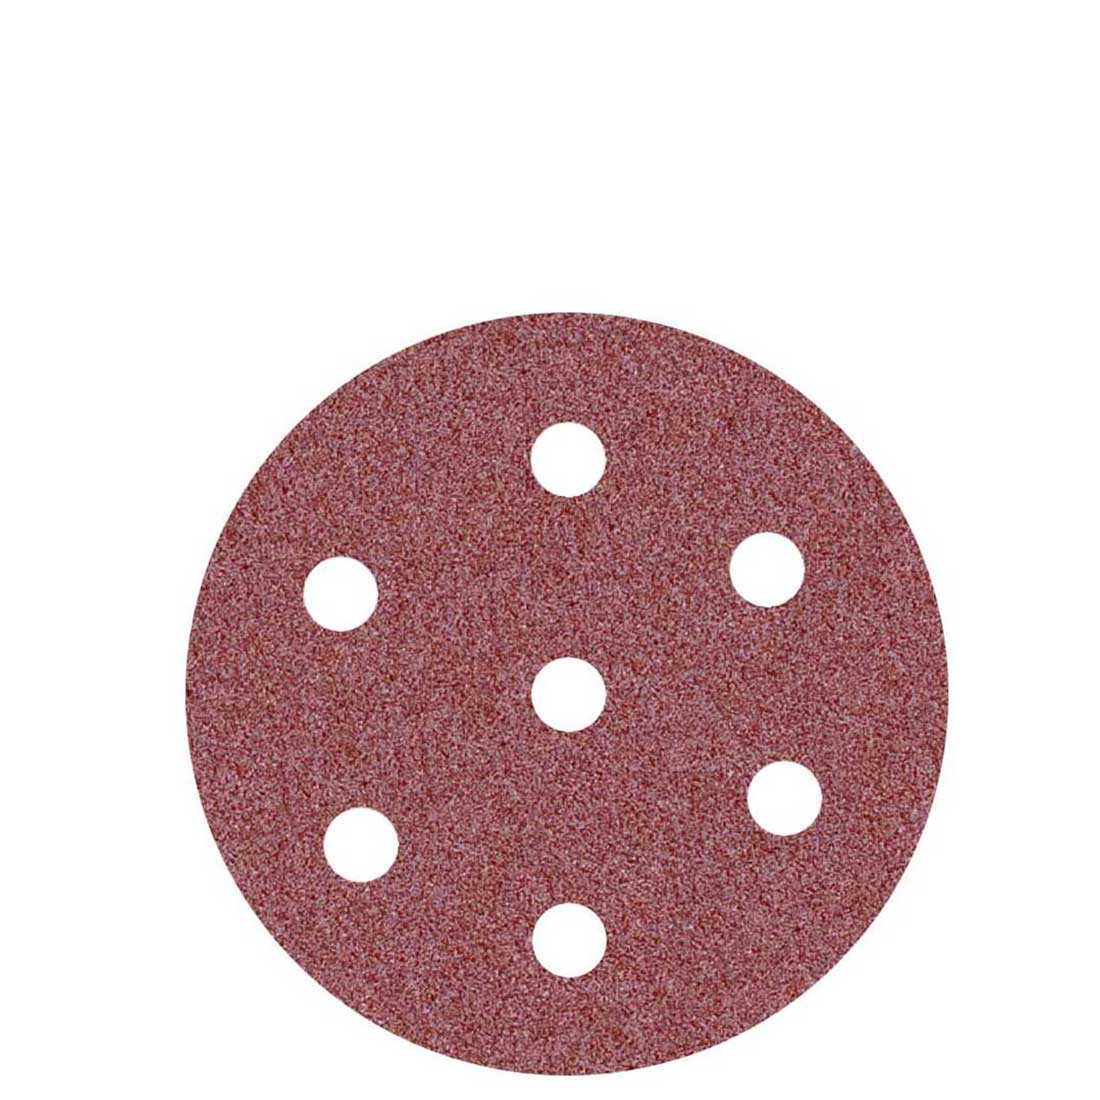 MioTools hook & loop sanding discs for random orbital sanders, G24–240, Ø 90 mm / 7 hole / aluminium oxide